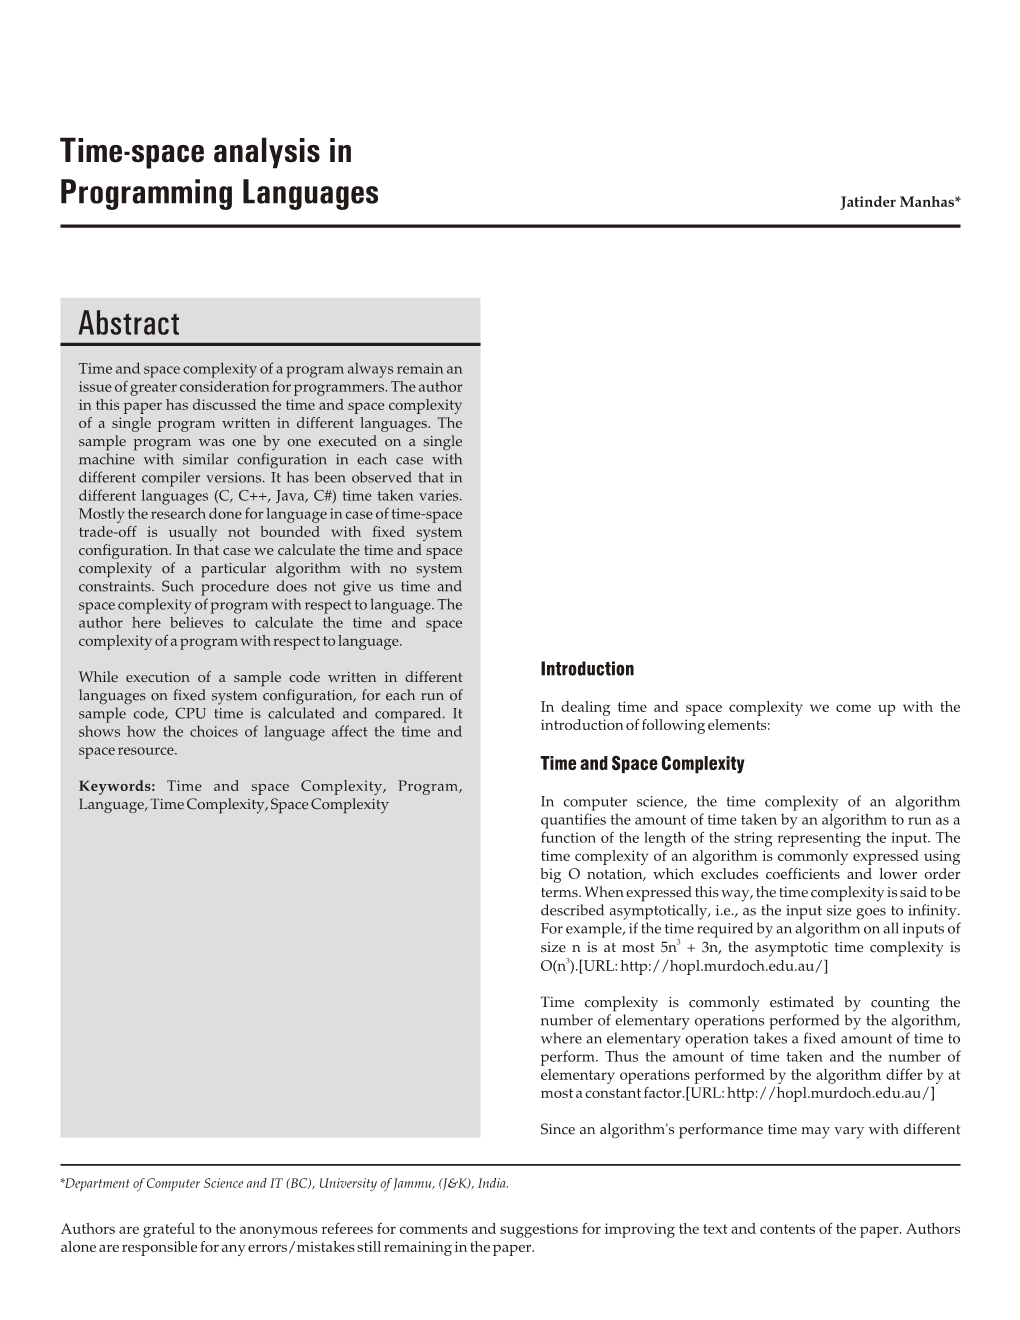 Time-Space Analysis in Programming Languages 109